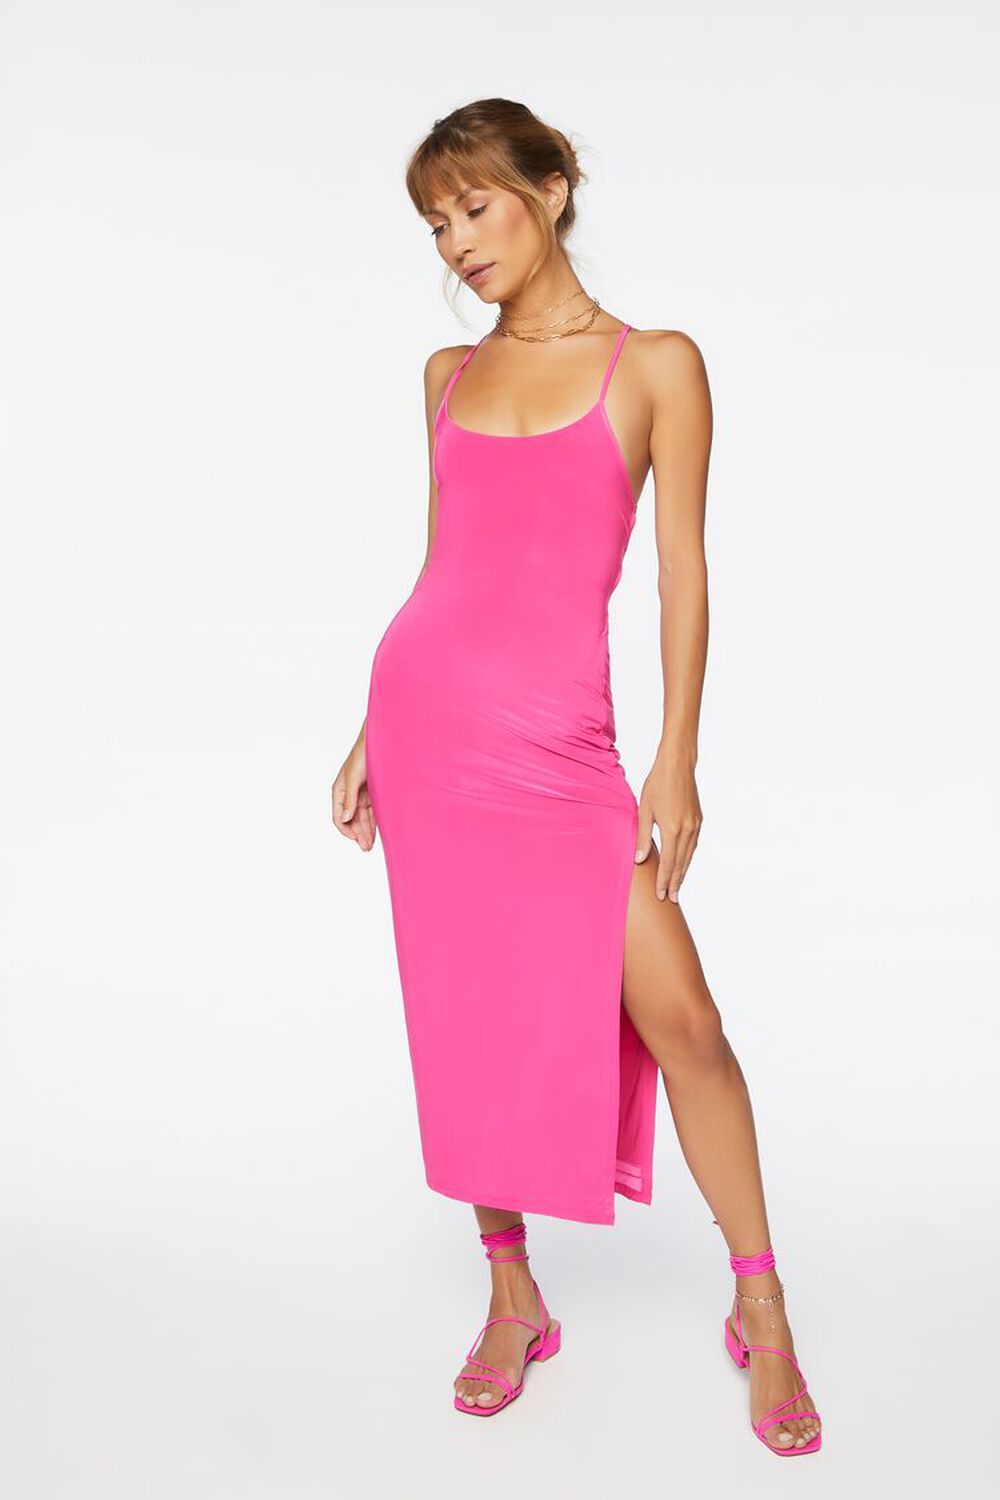 SHOCKING PINK Lace-Up Midi Cami Dress, image 1